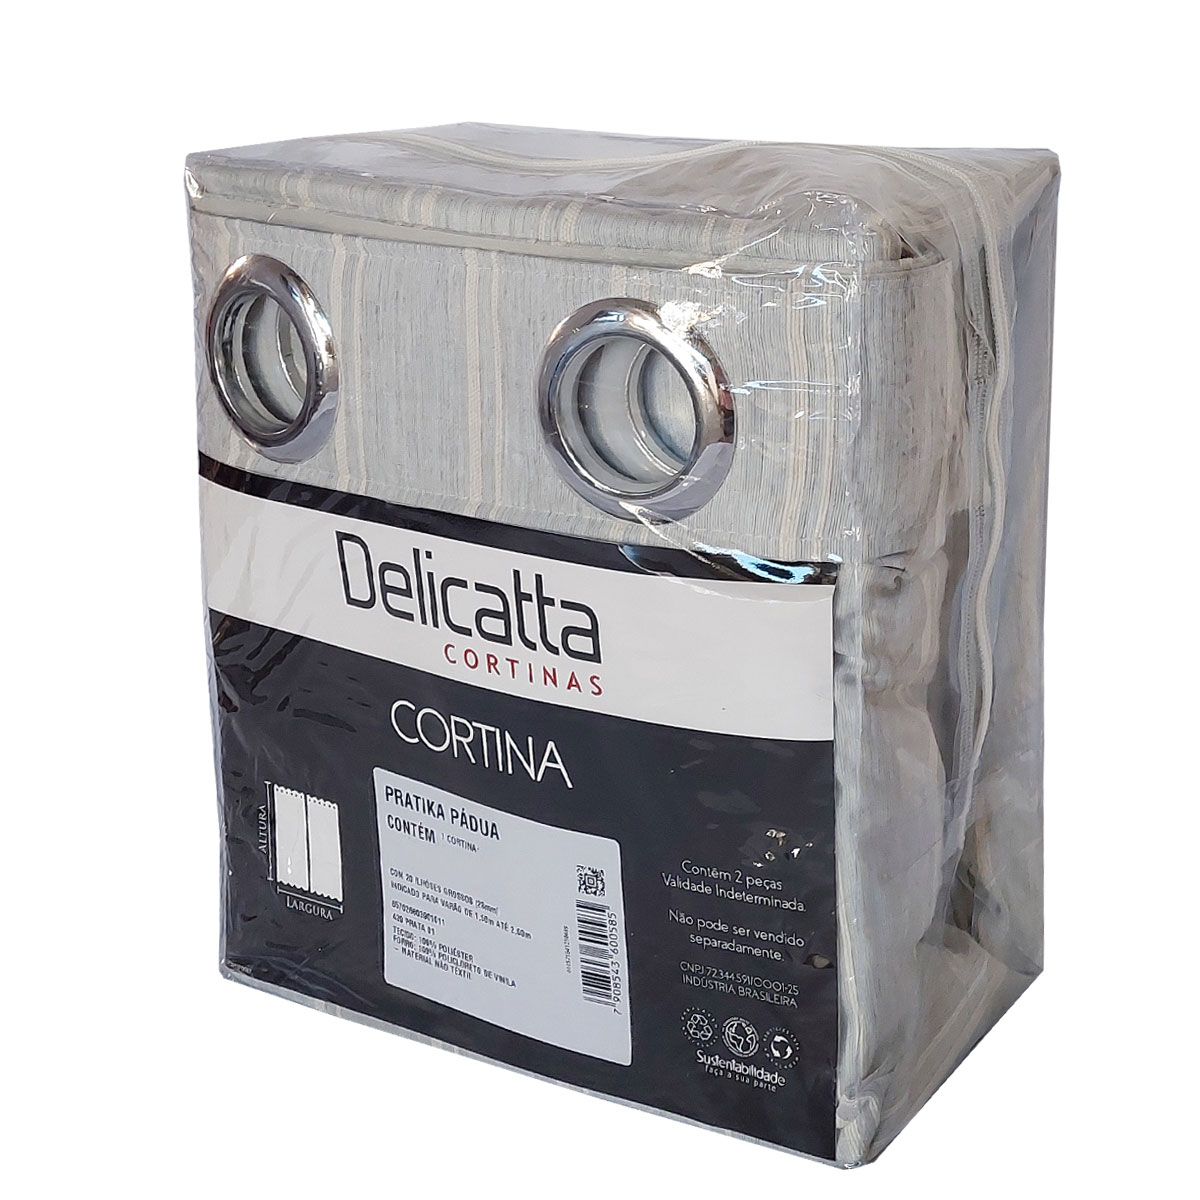 Cortina Pratika Blecaute 2,60 x 1,70m Pádua Prata 01 Delicatta